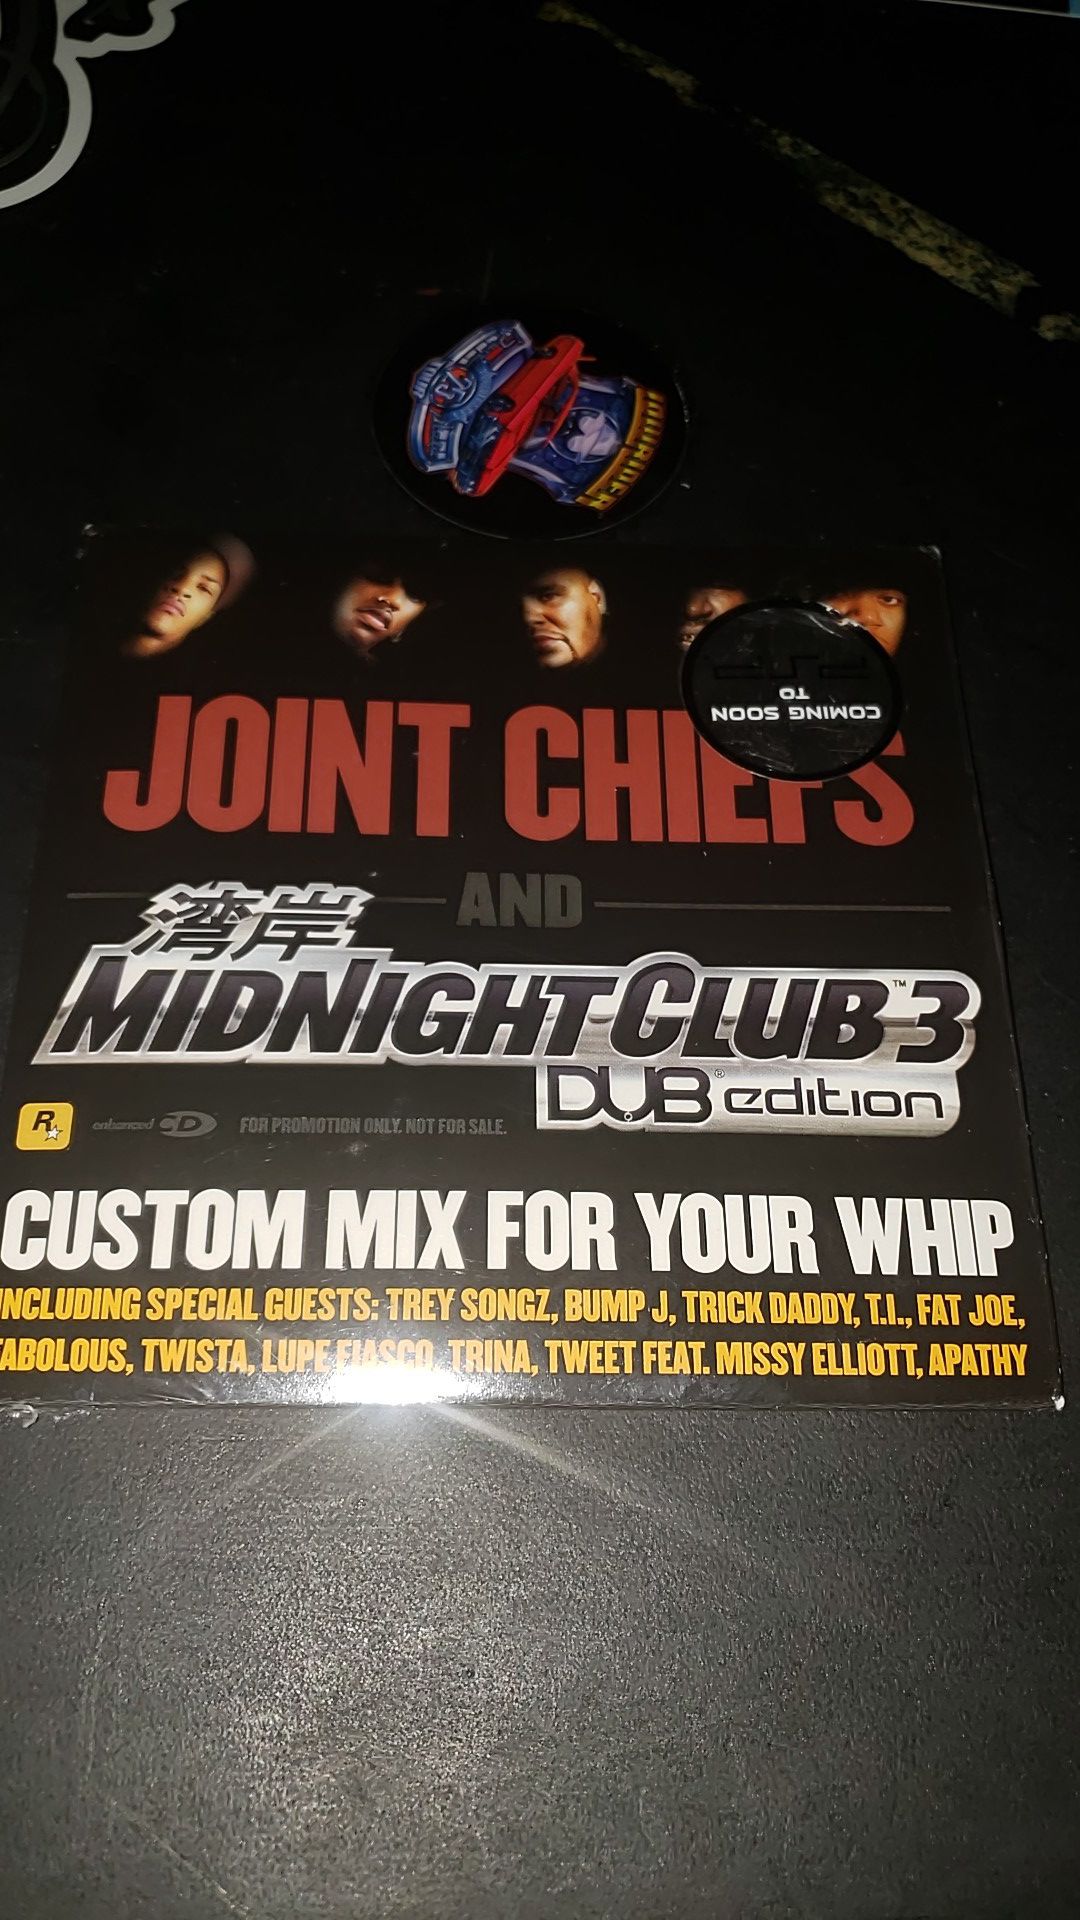 Midnight club 3 collector's cd